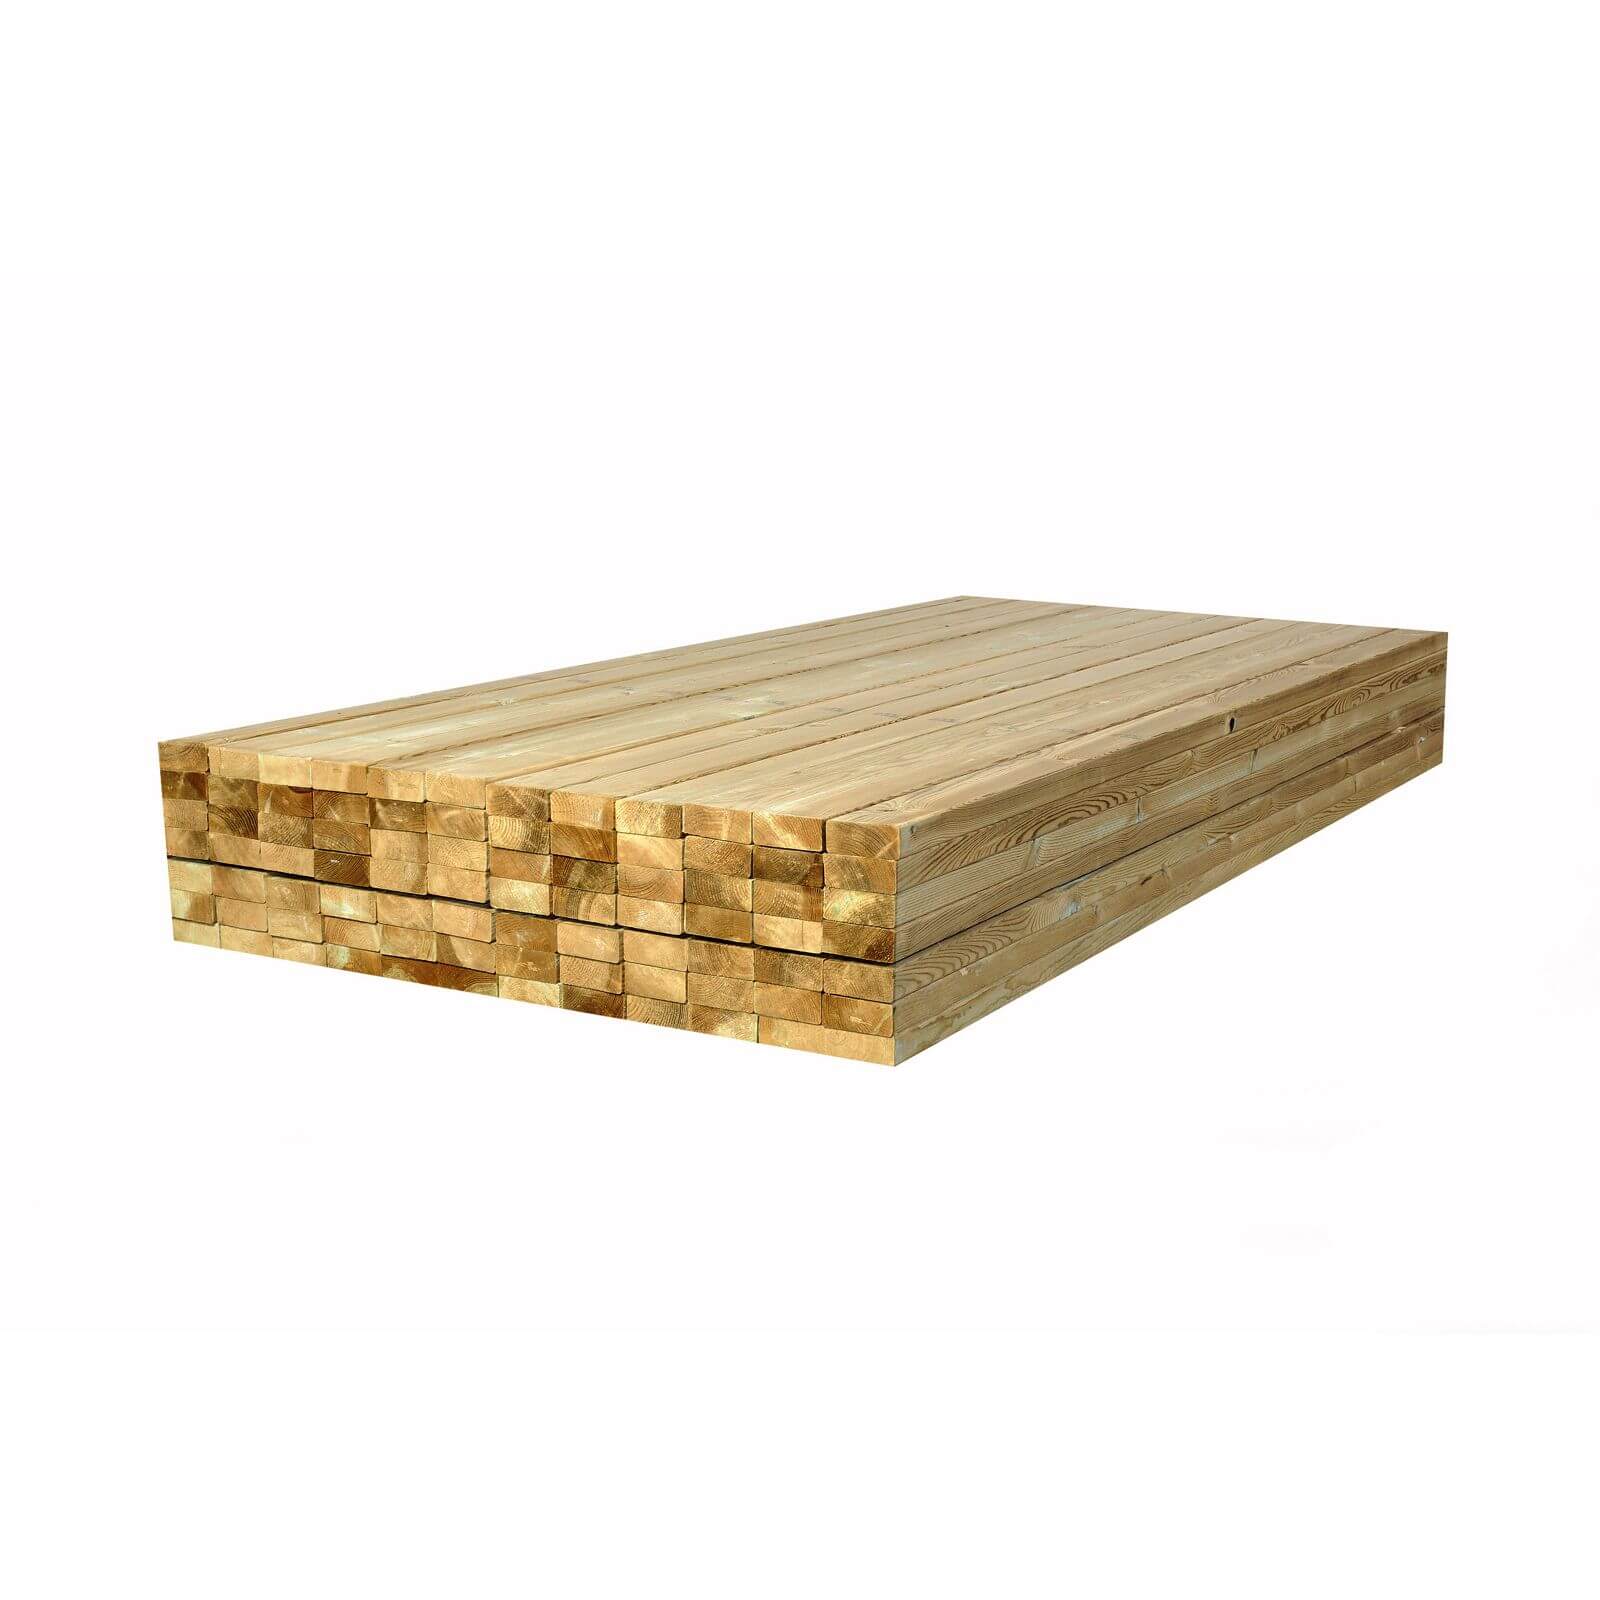 Metsa CLS Studwork Redwood Stick Timber 2.4m (38mm x 89mm x 2400mm)